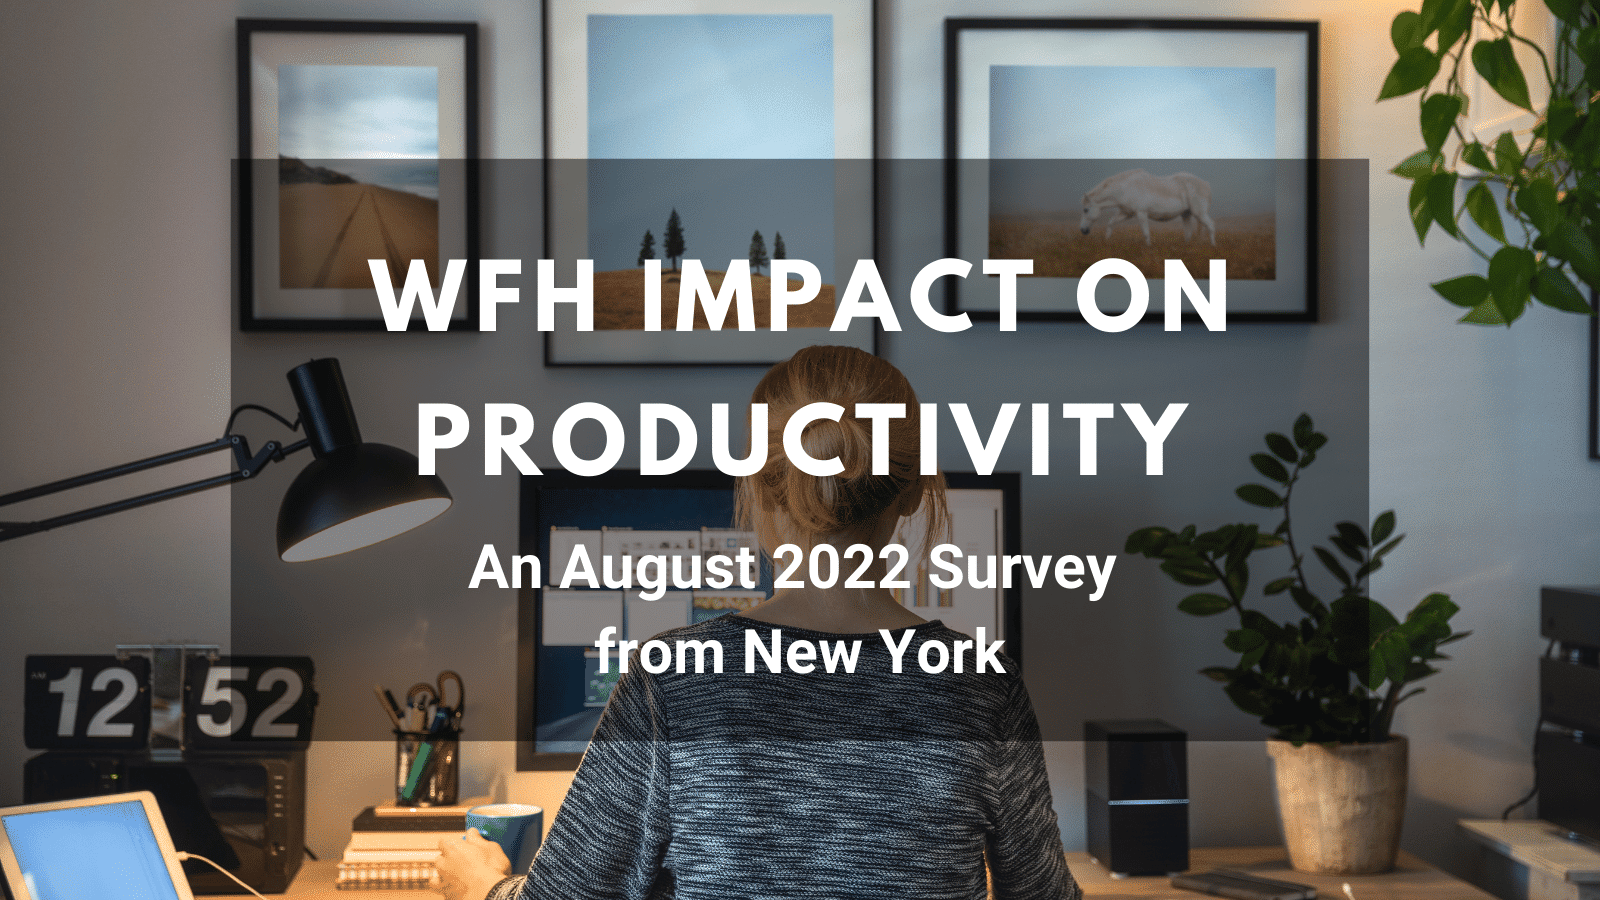 WFH impact on productivity